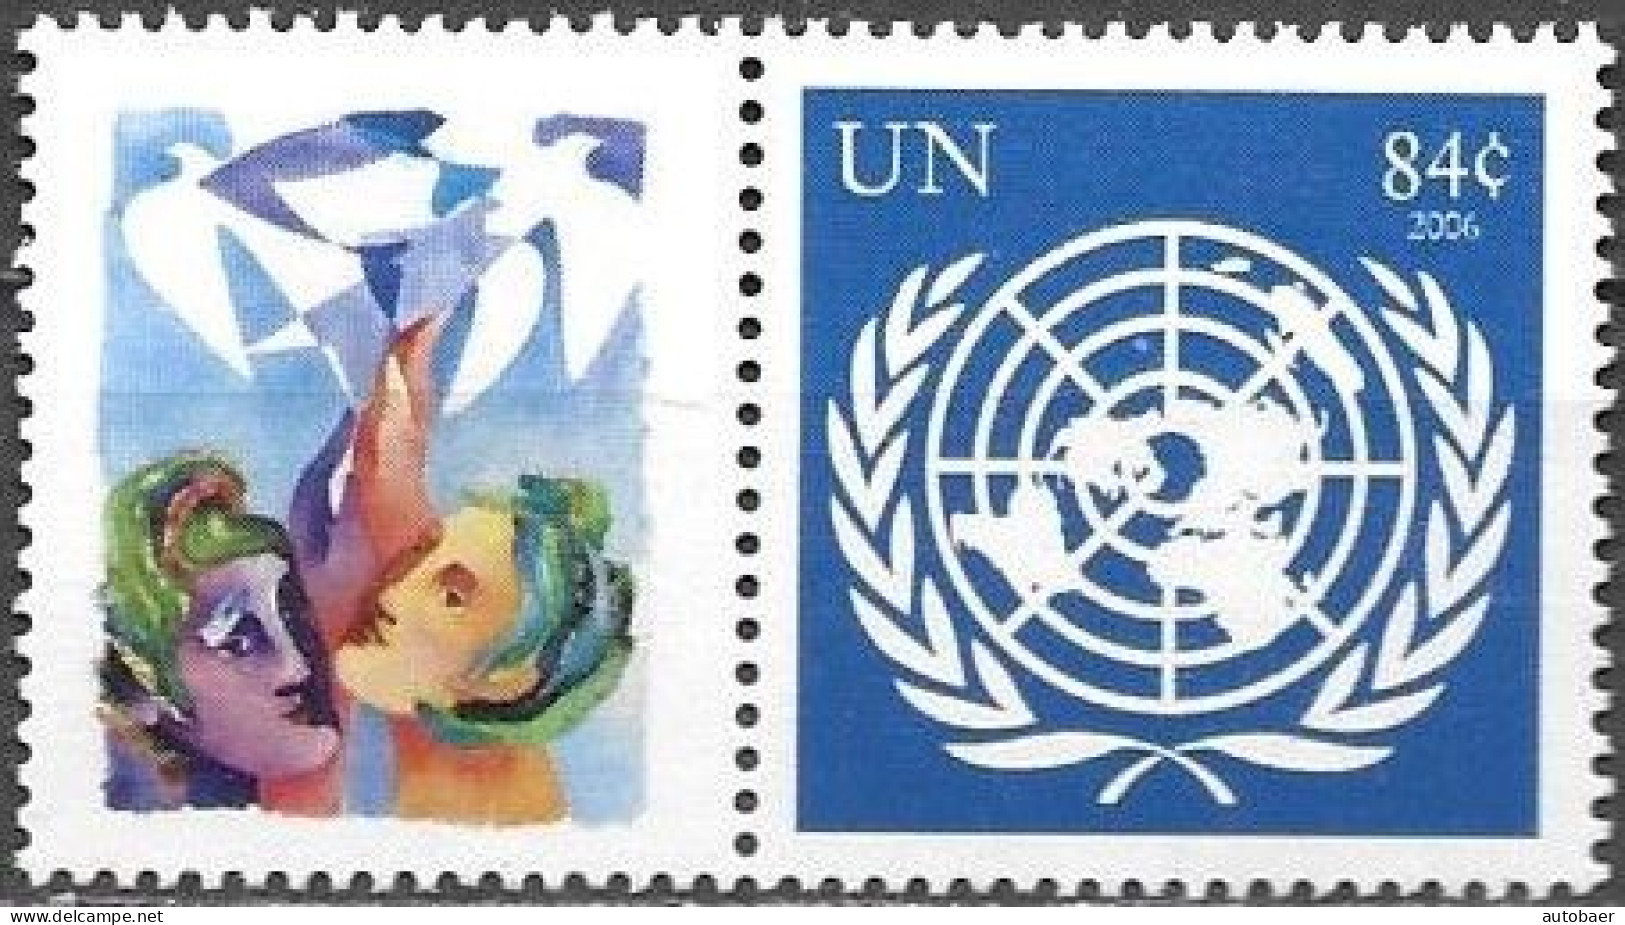 United Nations UNO UN Vereinte Nationen New York 2006 Greetings Mi.No.1032 Label MNH ** Neuf - Ongebruikt